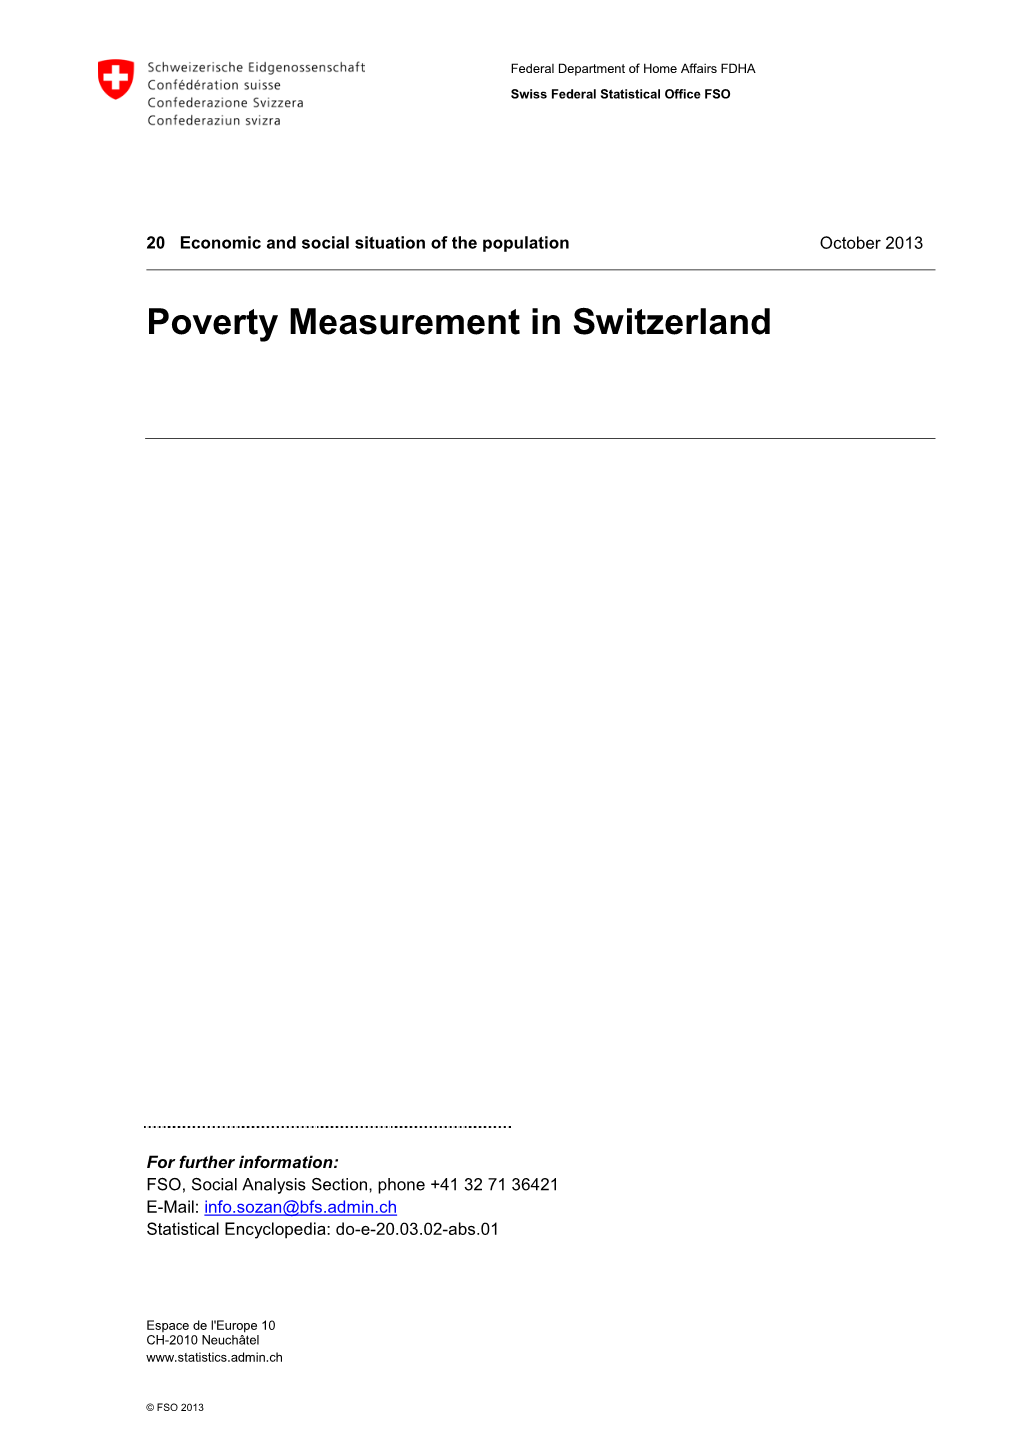 Poverty Measurement in Switzerland